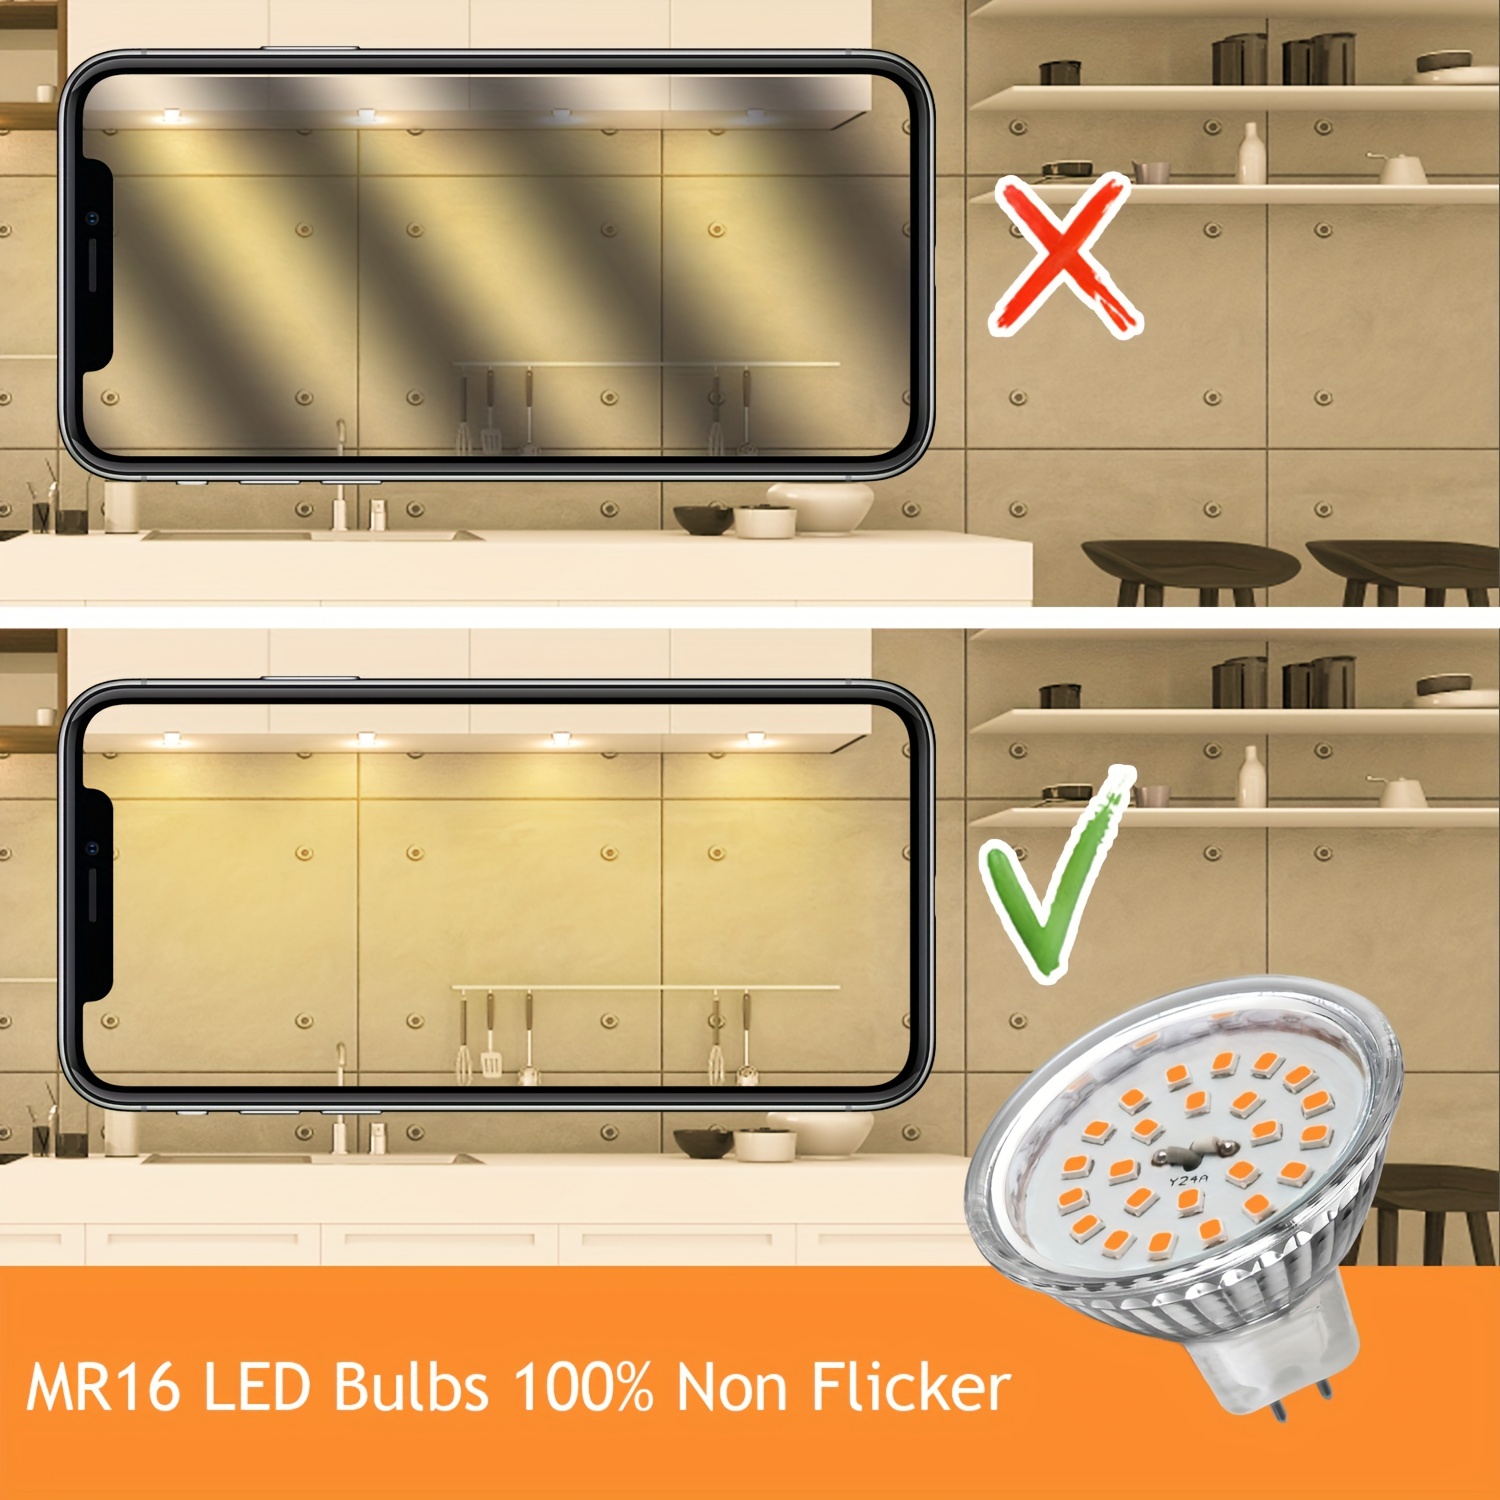 MikeWin MR16 LED Bulb 10Pack,5W 12V, GU5.3 Bi-Pin Base,50-Watt  Equivalent,2700K Warm White,Non-Dimmable MR16 LED Spot Light Bulbs for  Indoor Outdoor